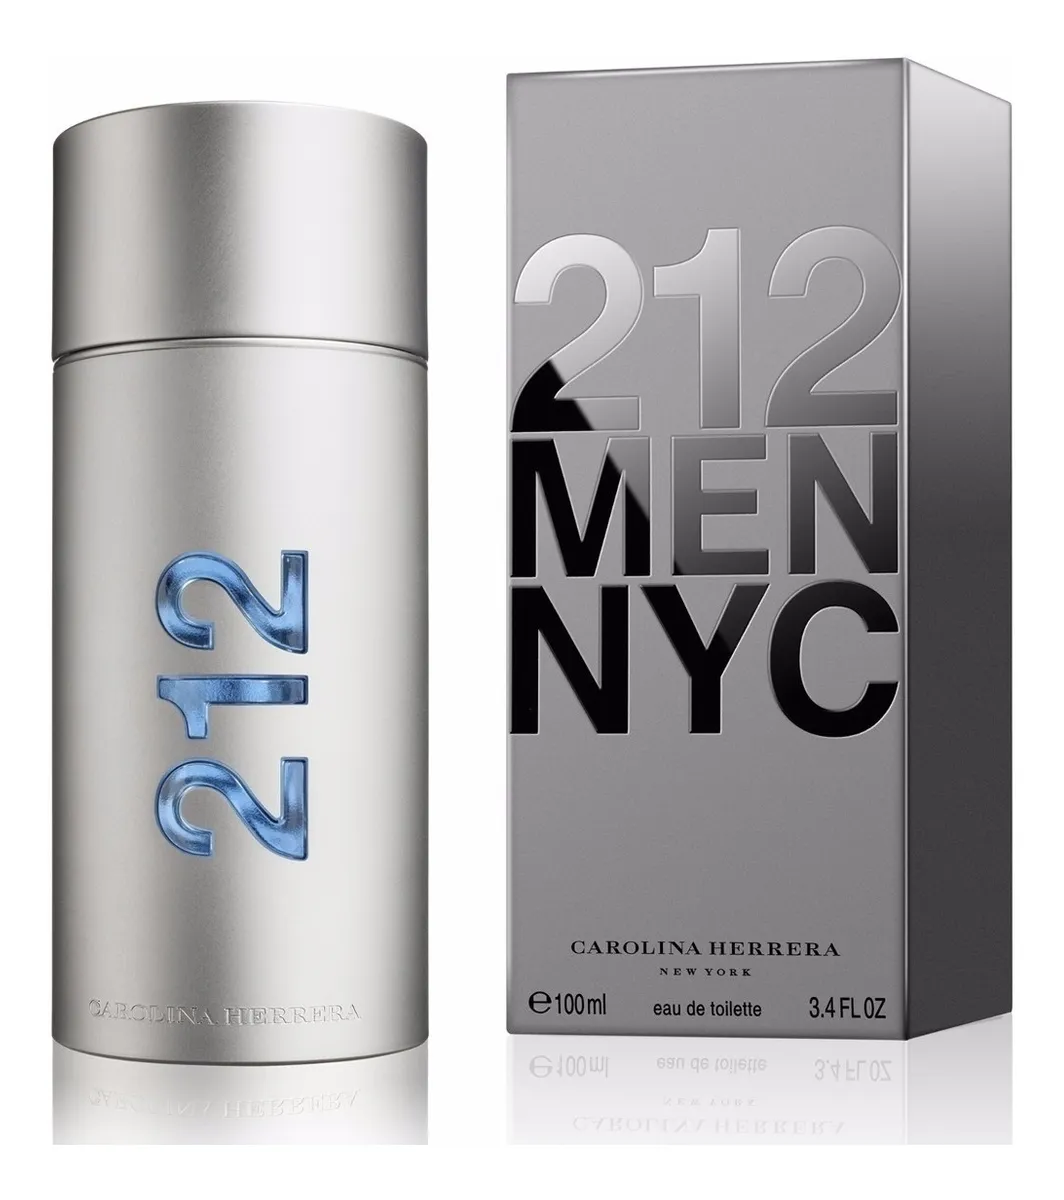 Perfume 212 NYC Men Carolina Herrera